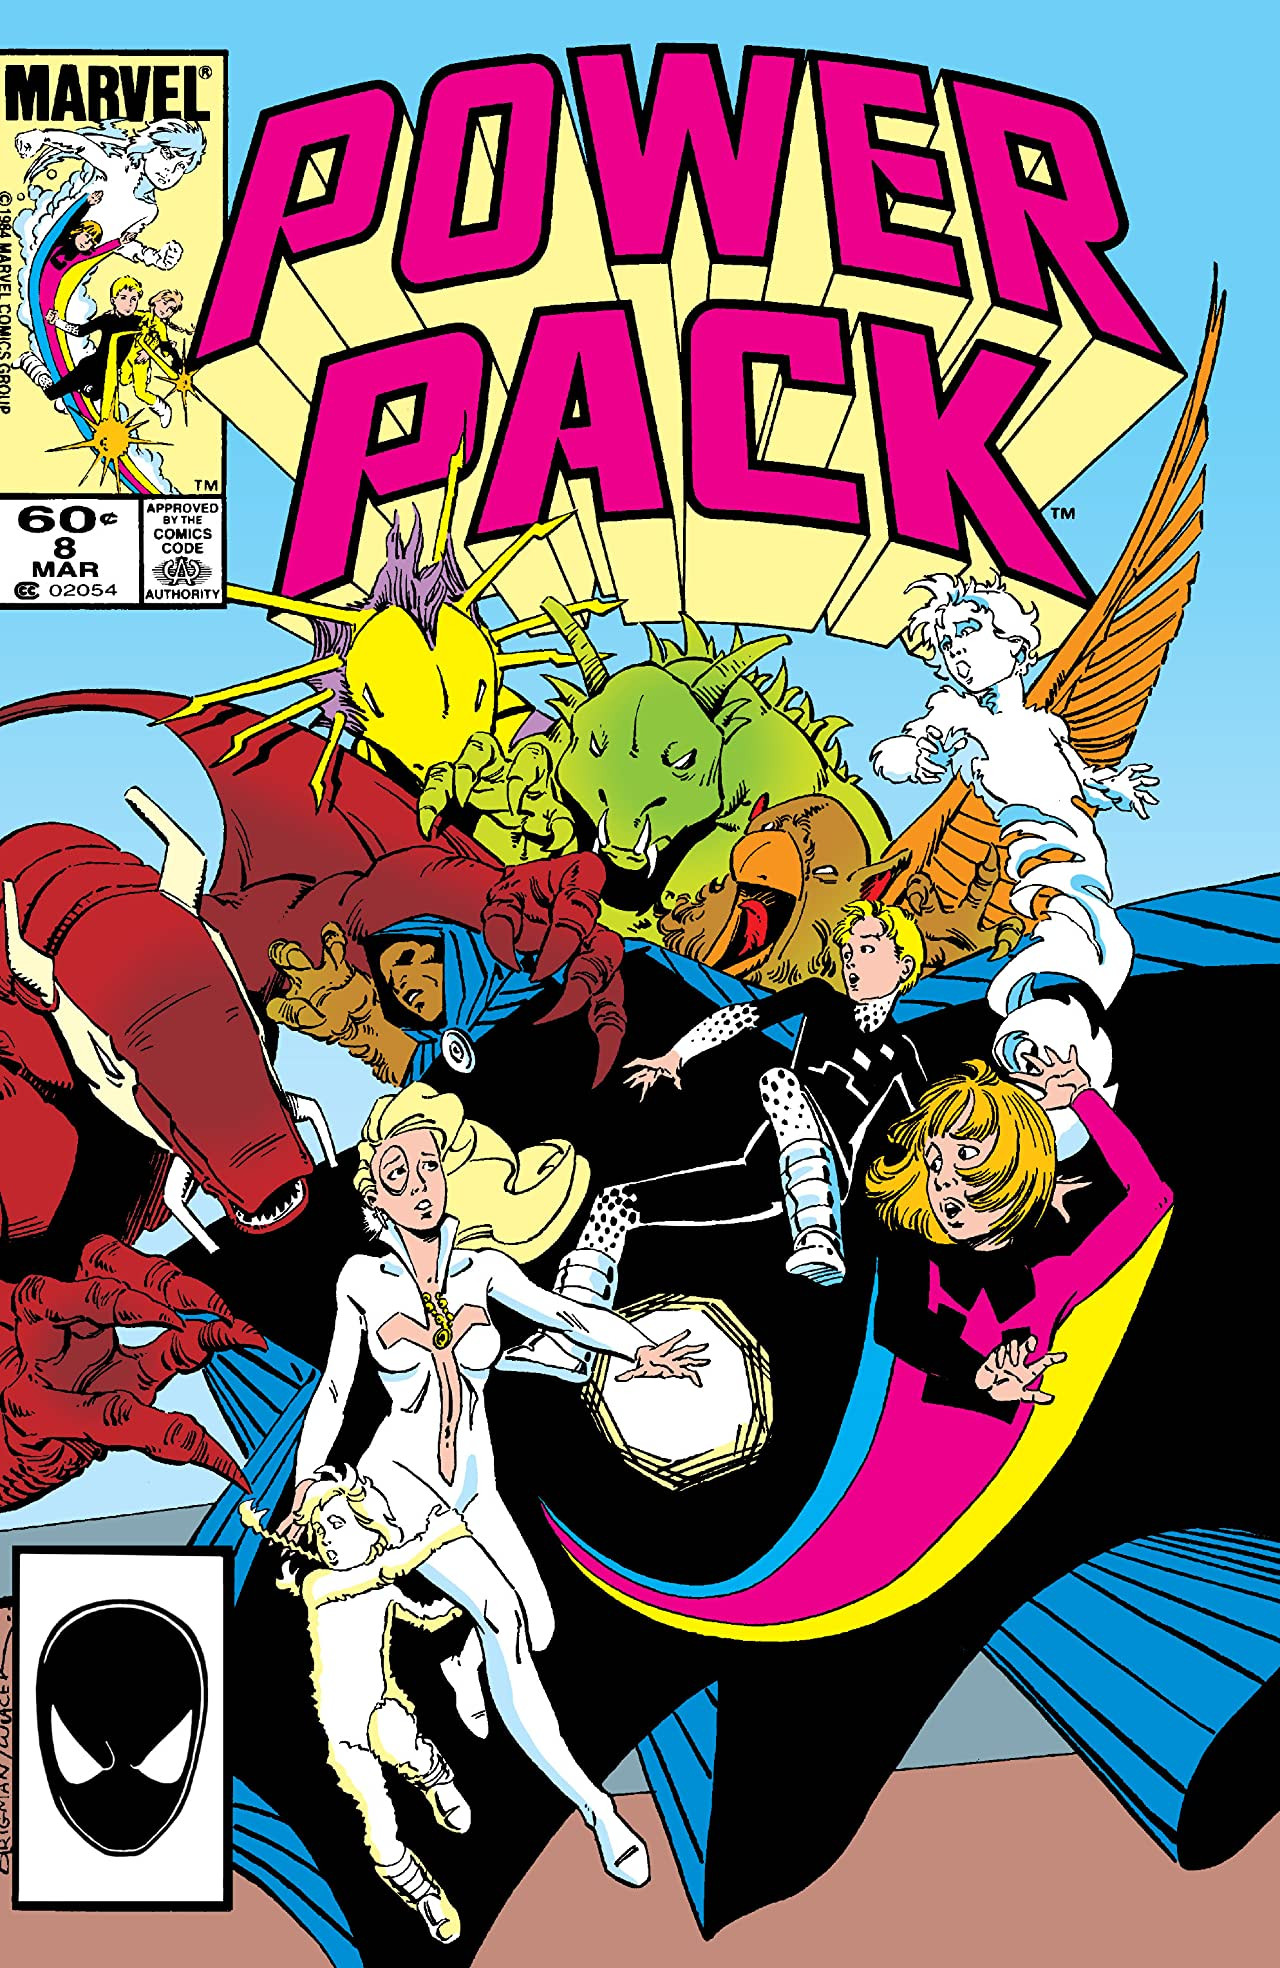 Power packing комиксы. POWERPACK Марвел. Power Pack комикс. A Power Packing комикс. Power Pack Marvel.